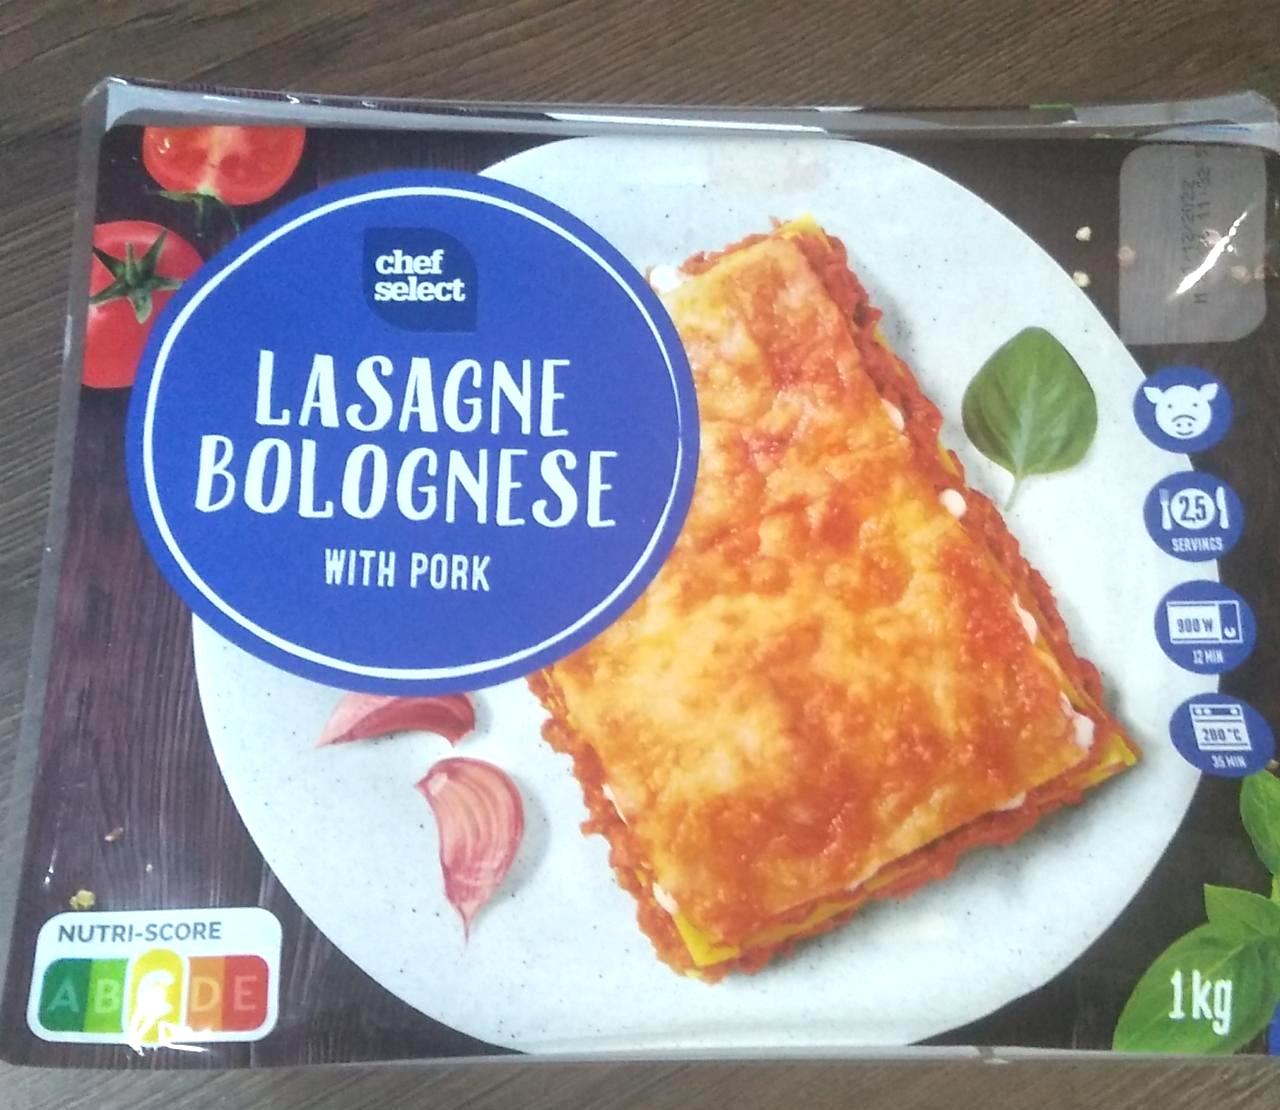 Képek - Lasagne Bolognese with Pork Chef select